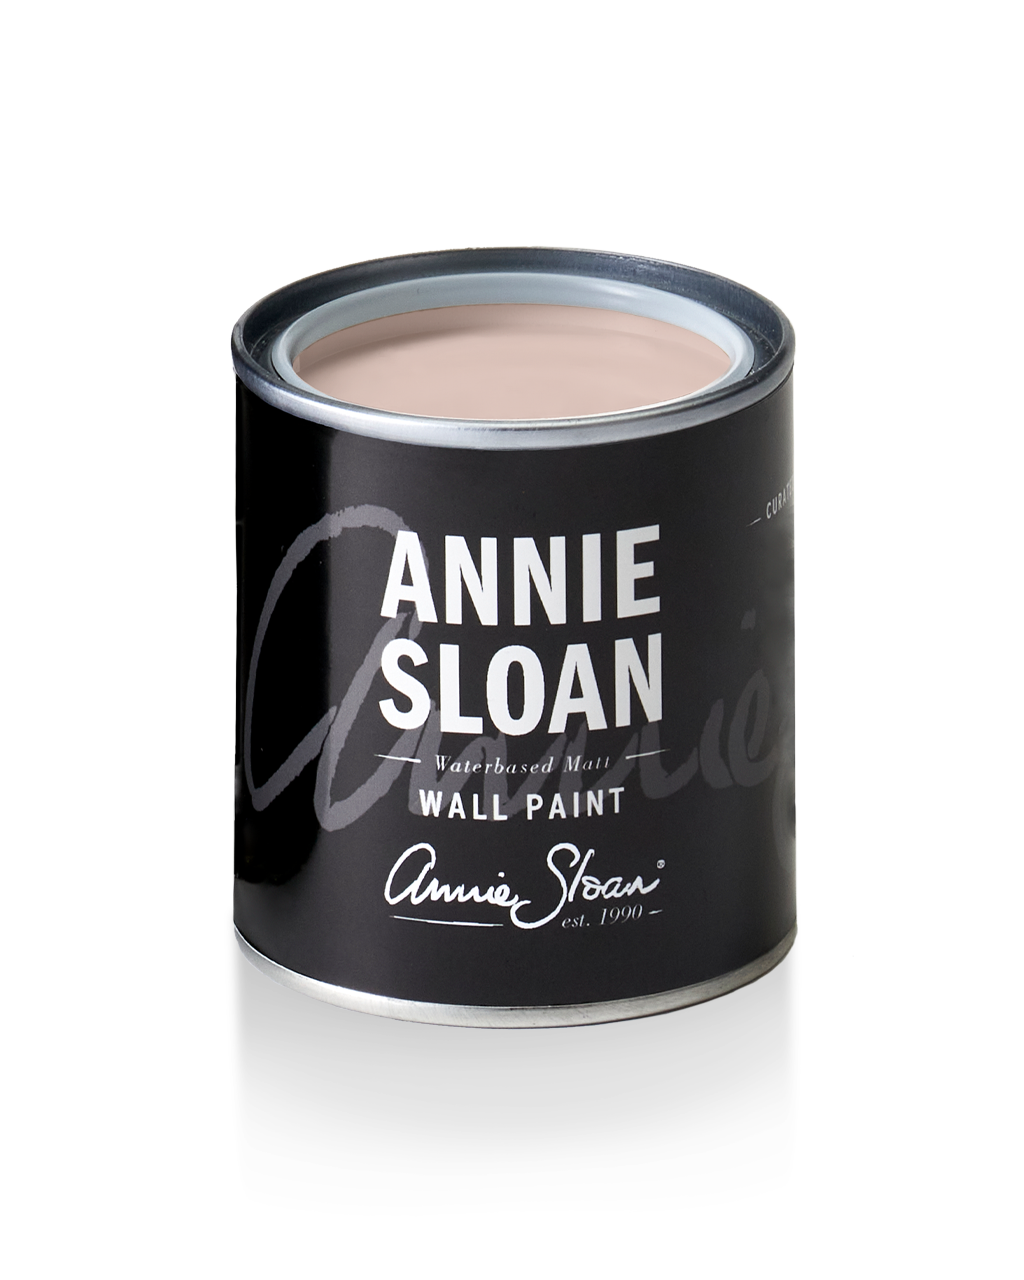 120ml tin of Pointe Silk wall paint by Annie Sloan